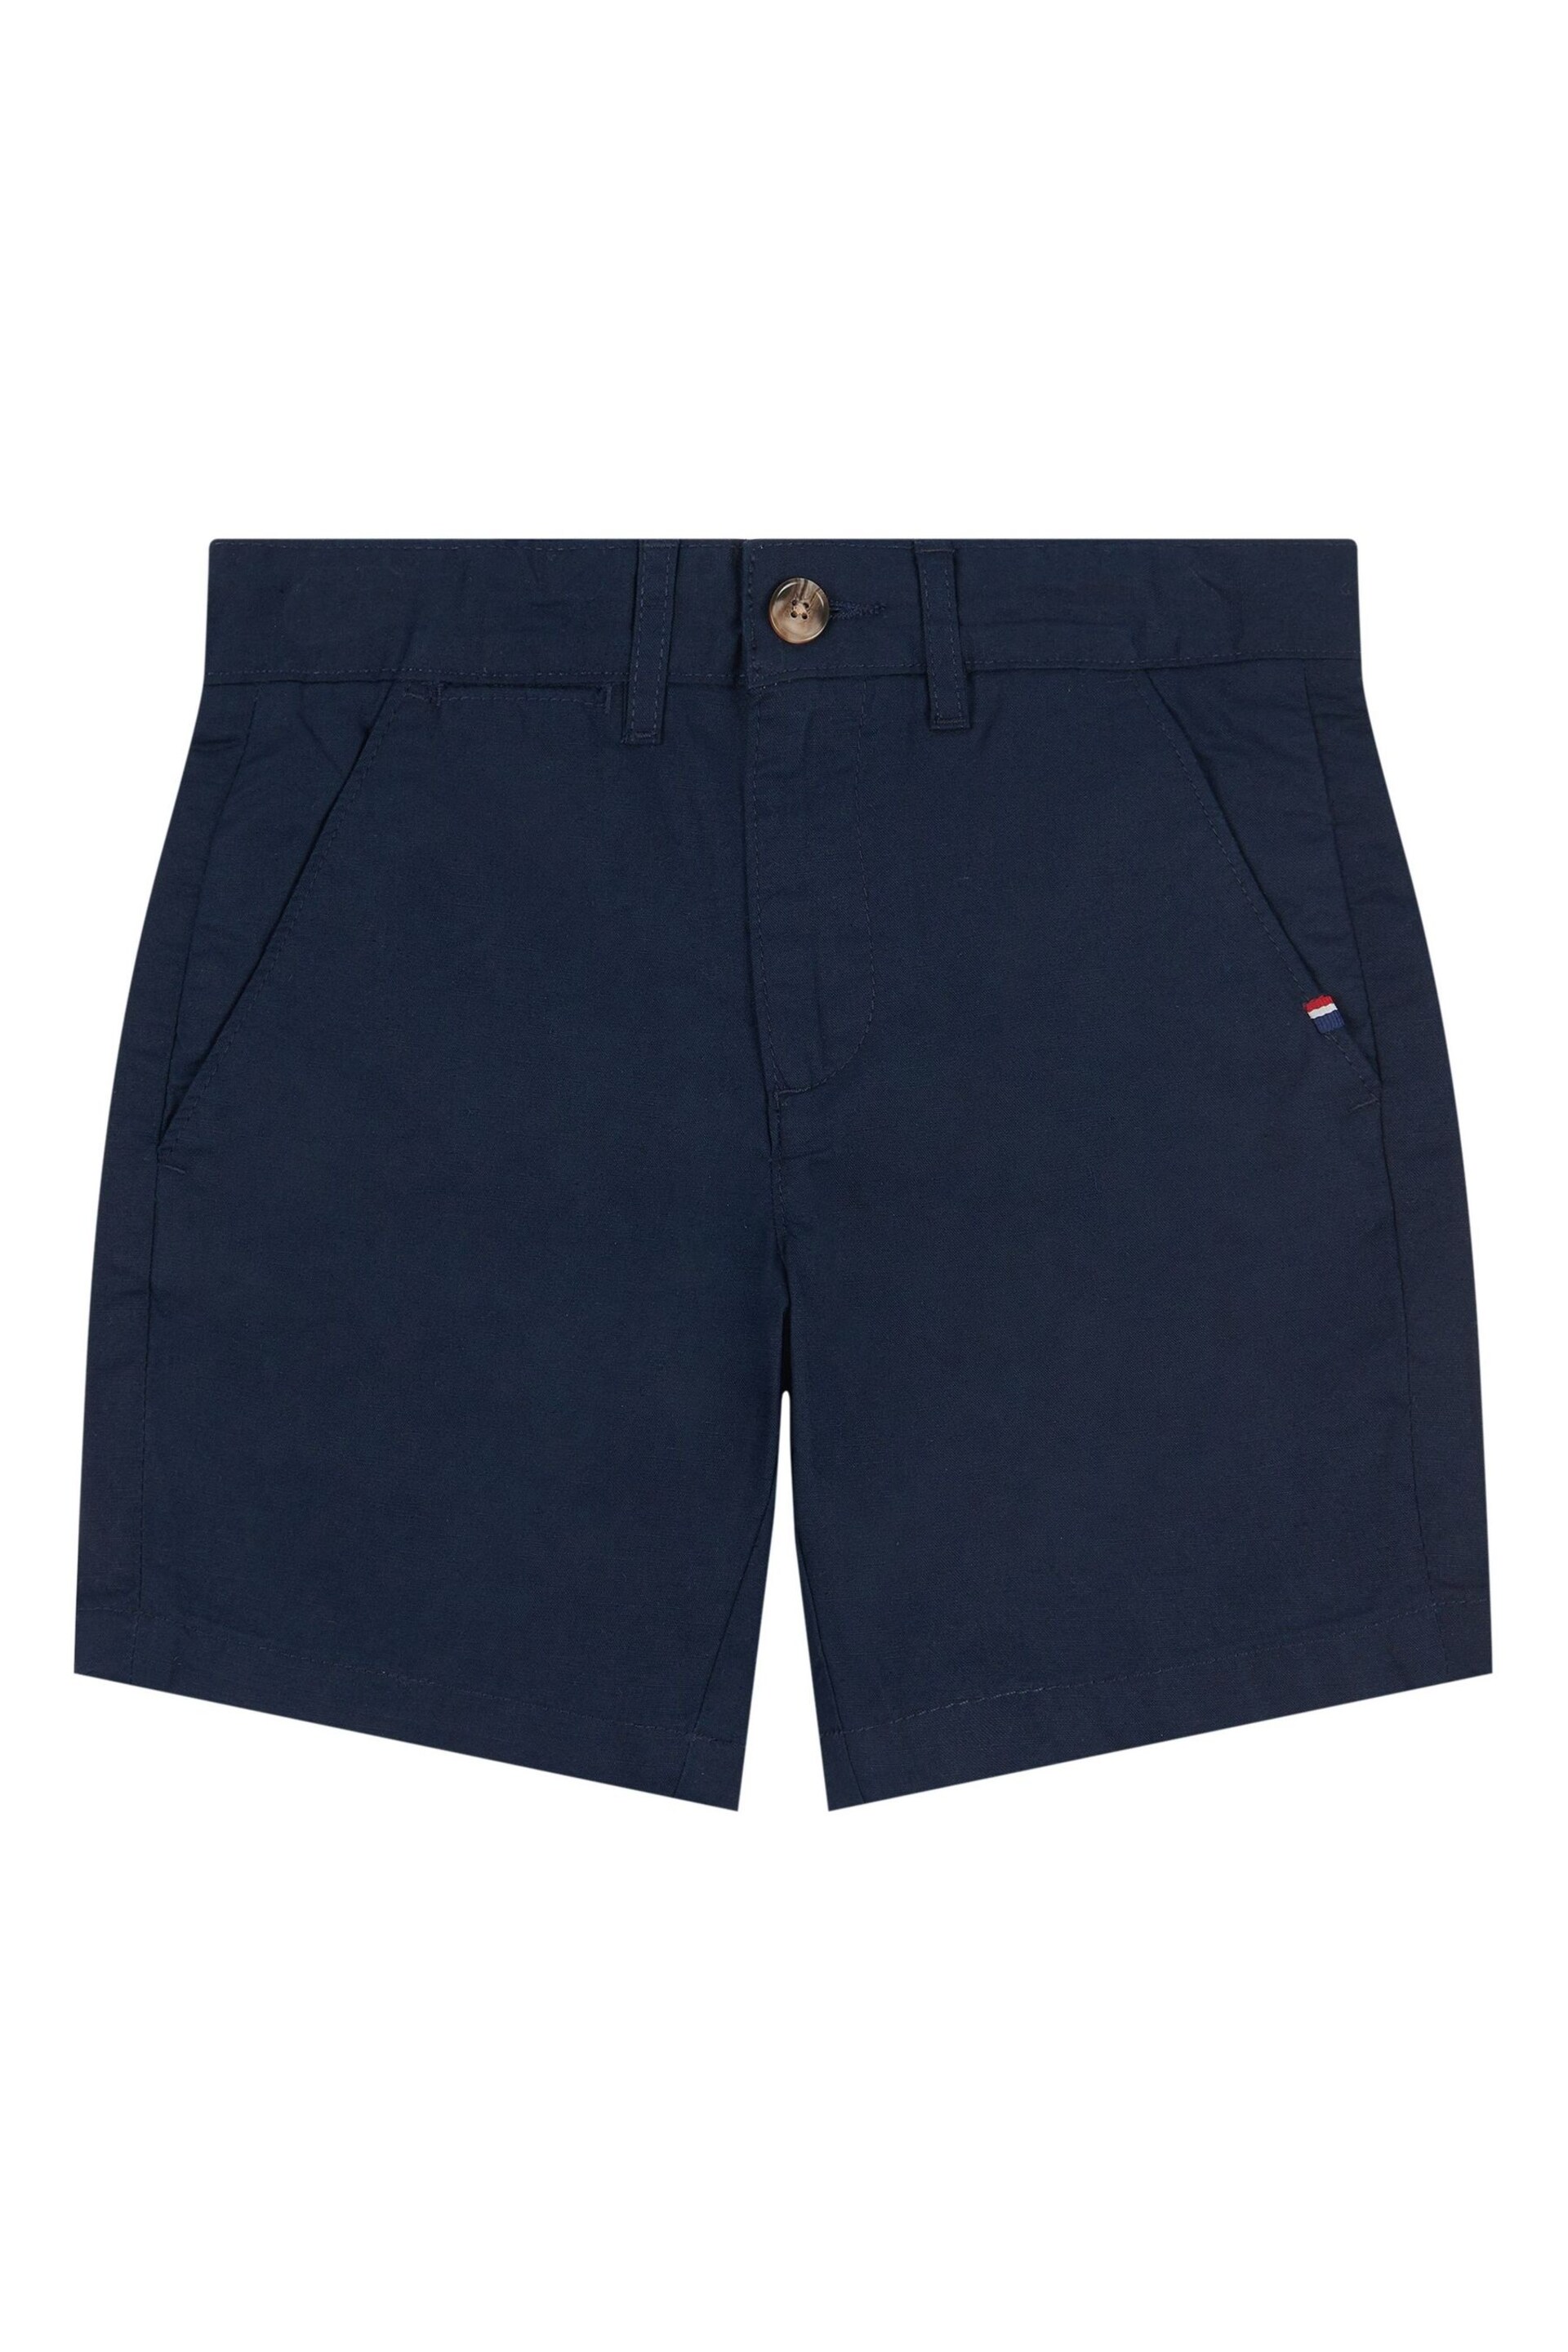 U.S. Polo Assn. Boys Blue Linen Blend Chino Shorts - Image 5 of 7